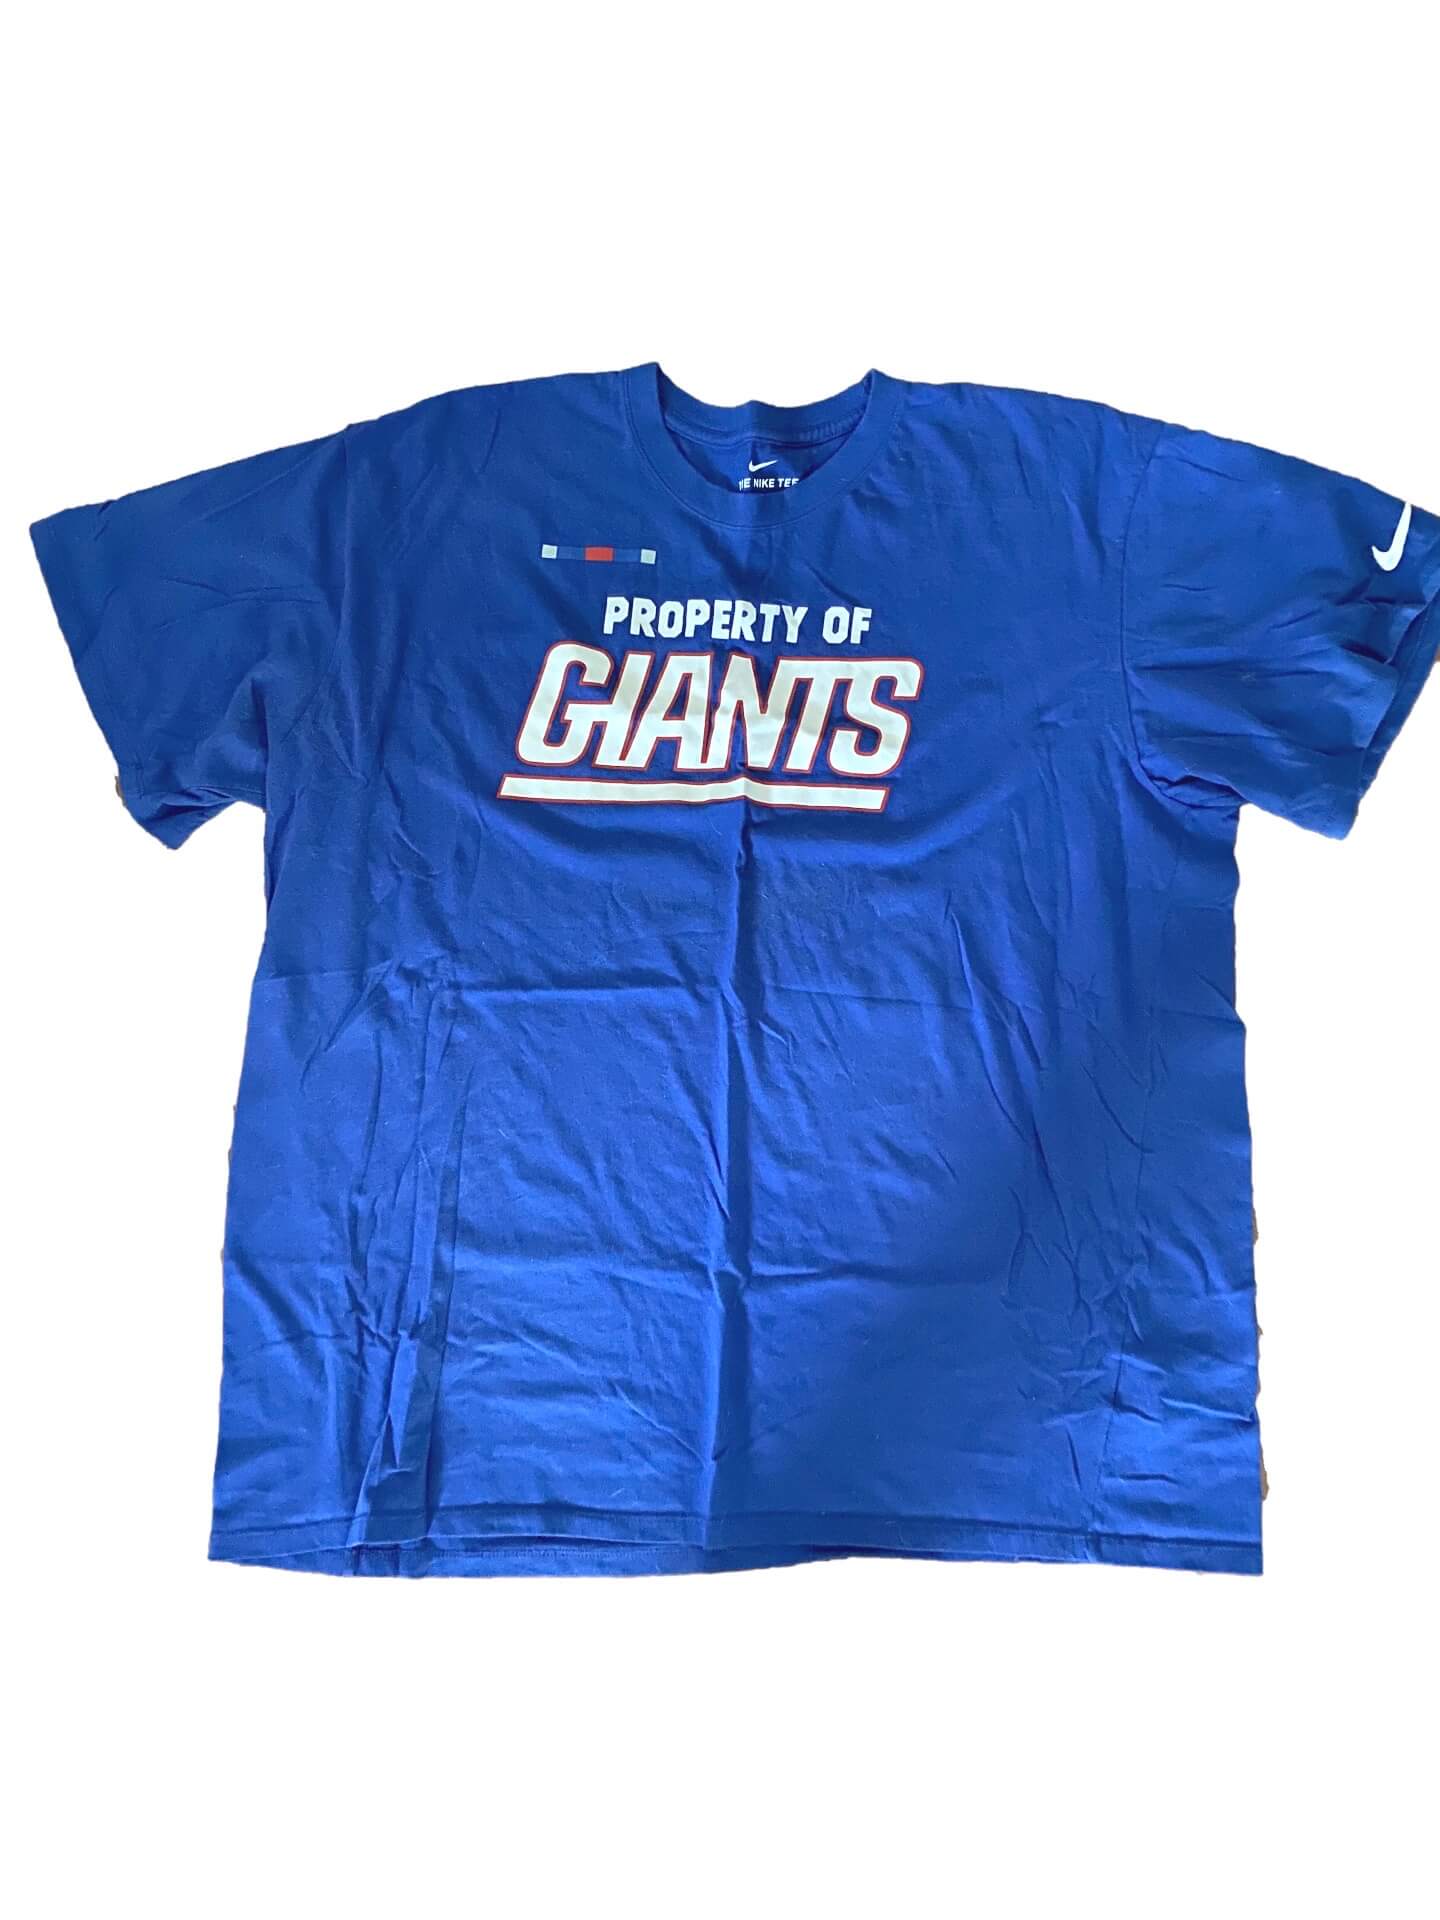 New York Giants Nike Tee : NARP Clothing